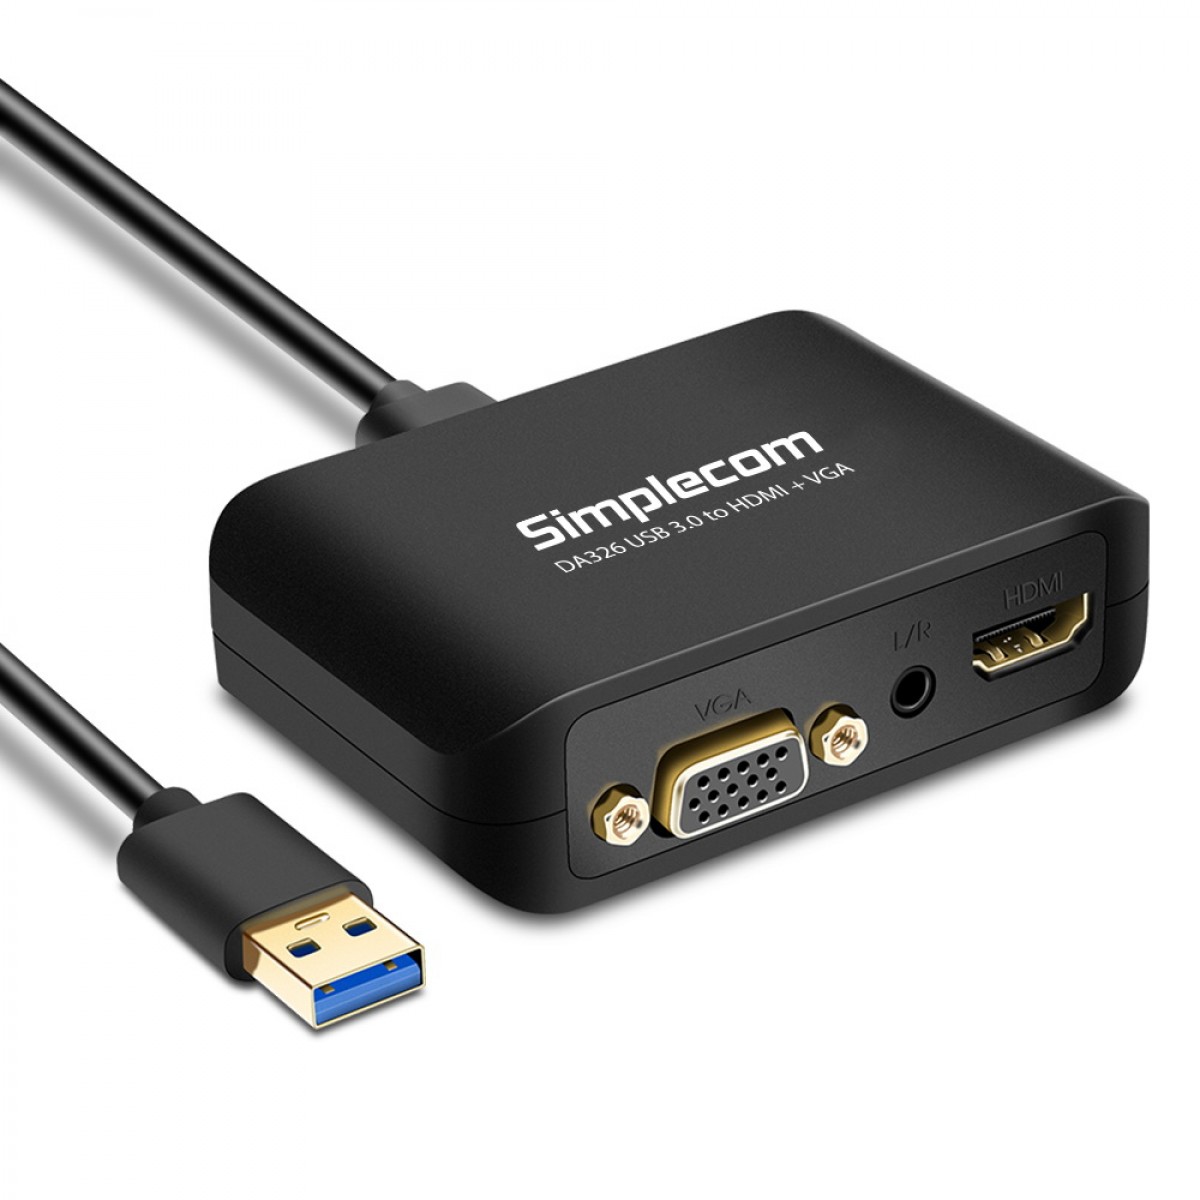 HDMI to VGA wiht Audio Cable Adapter - Buy HDMI to VGA wiht Audio